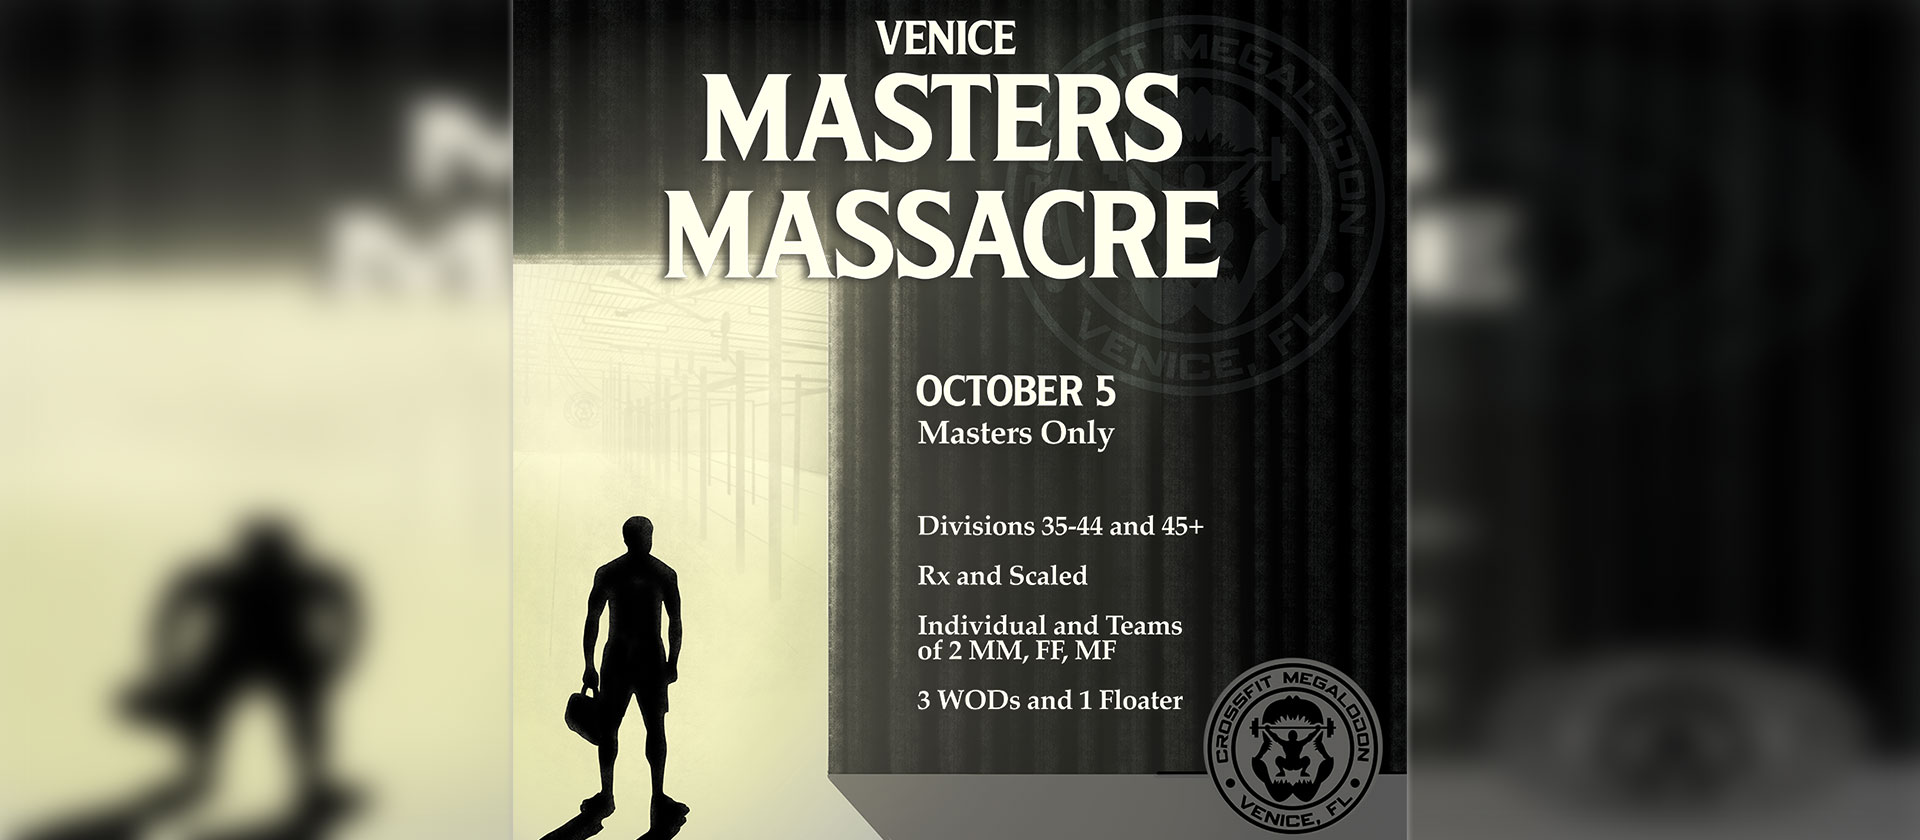 Venice Masters Massacre in Venice, Florida